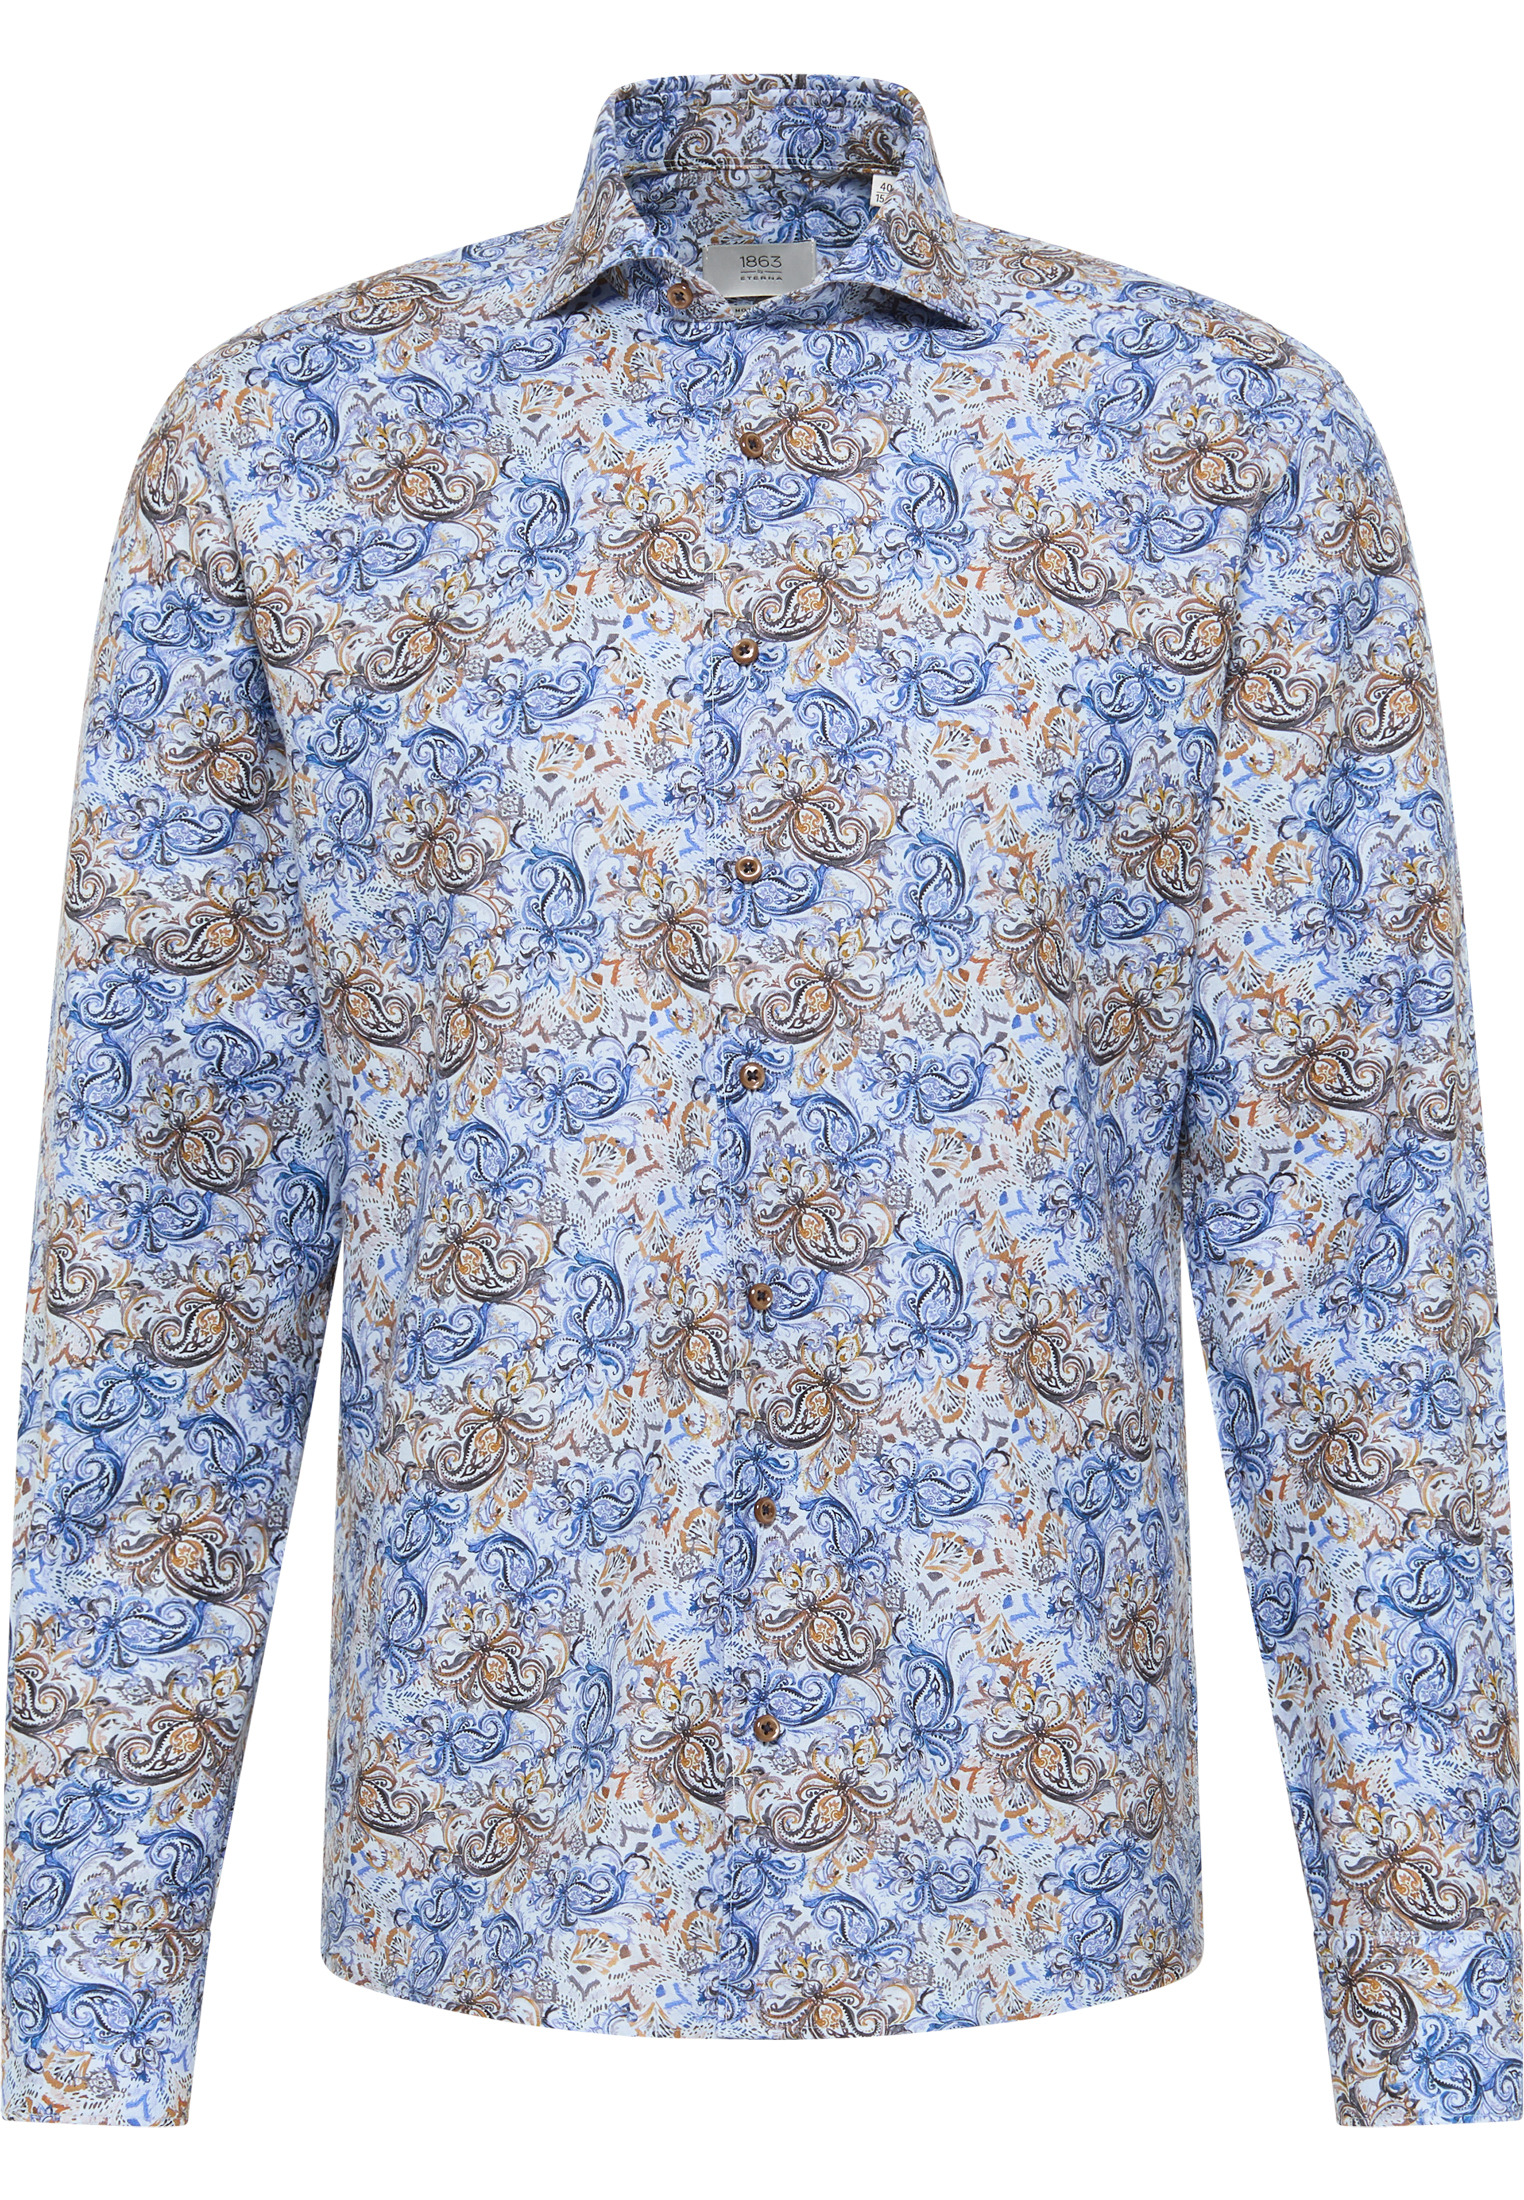 MODERN FIT Shirt in smoke blue printed